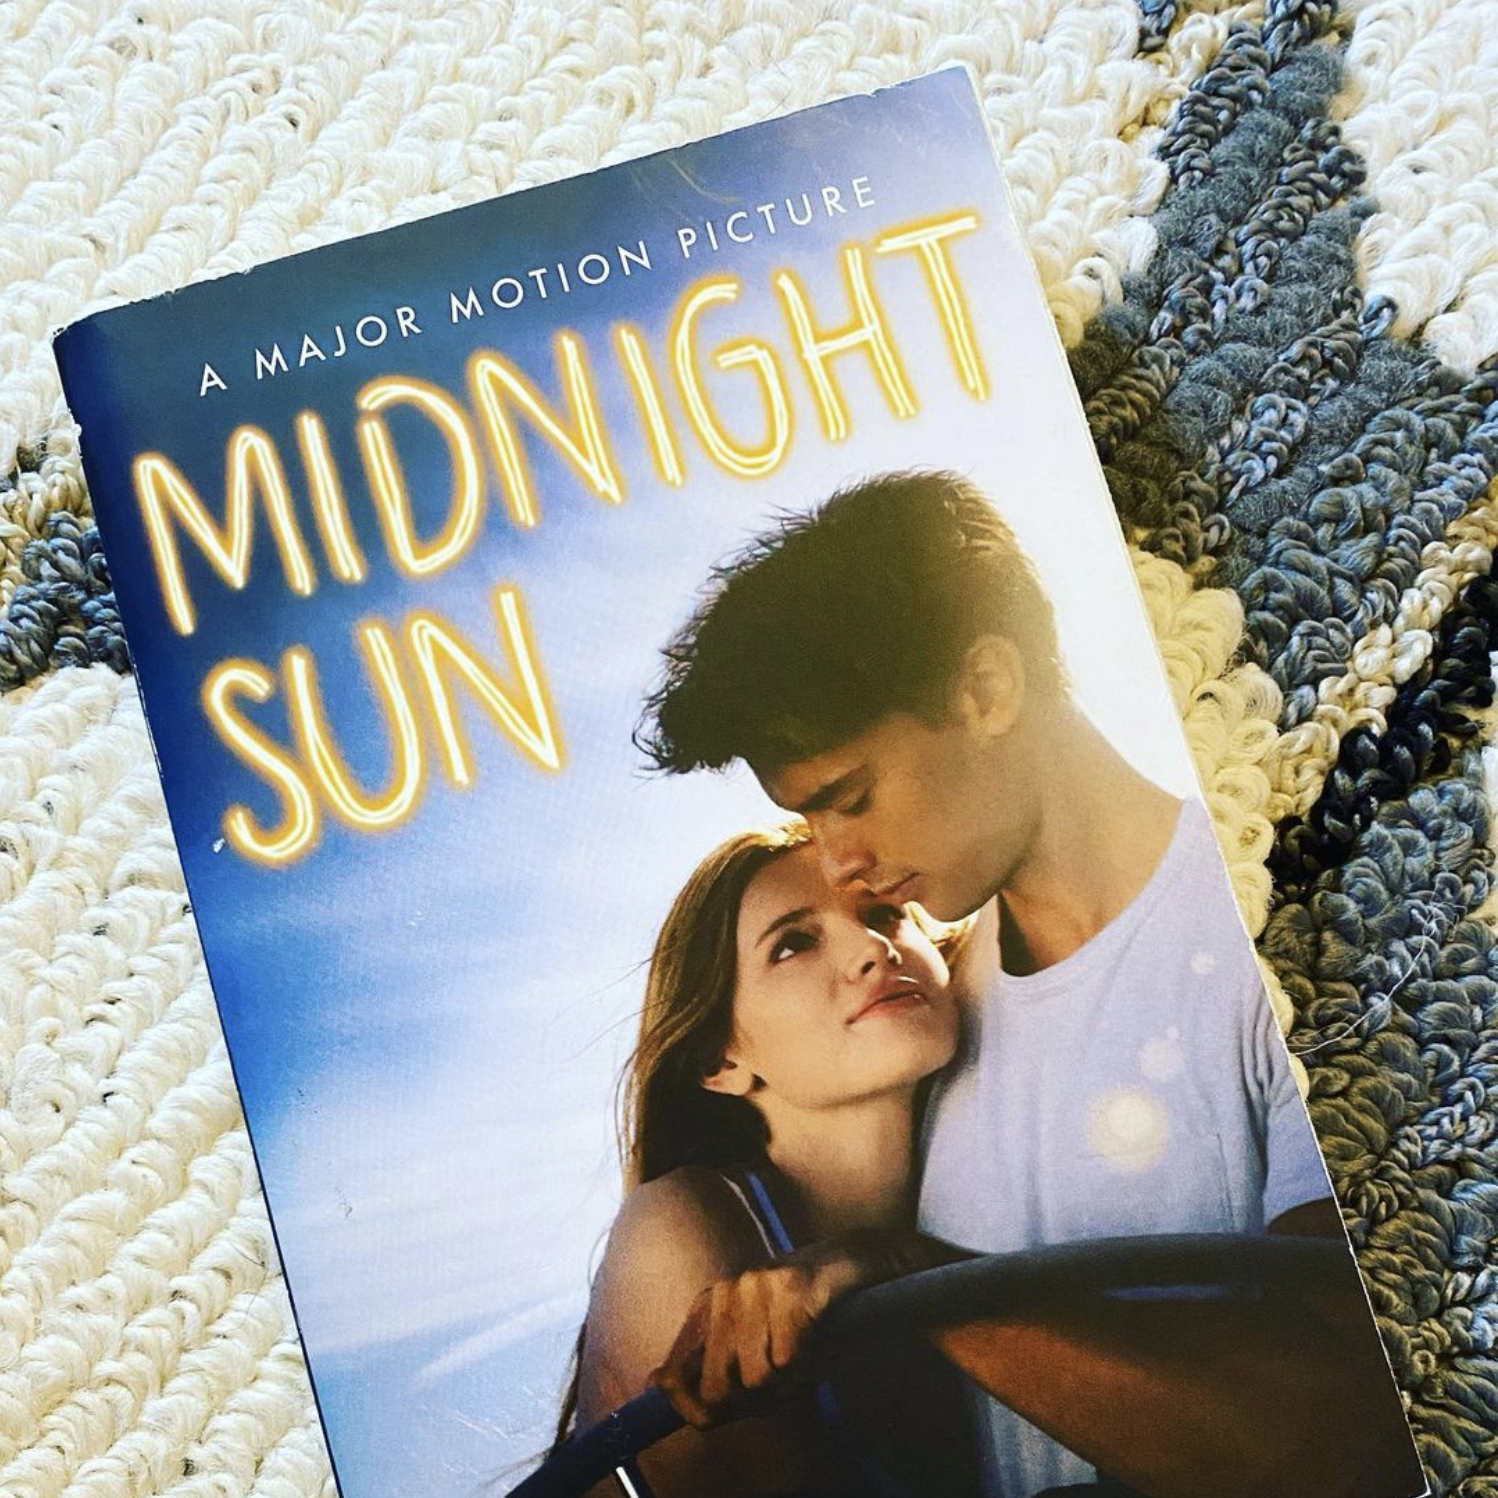 NOVL - Instagram image of Midnight Sun by Trish Cook